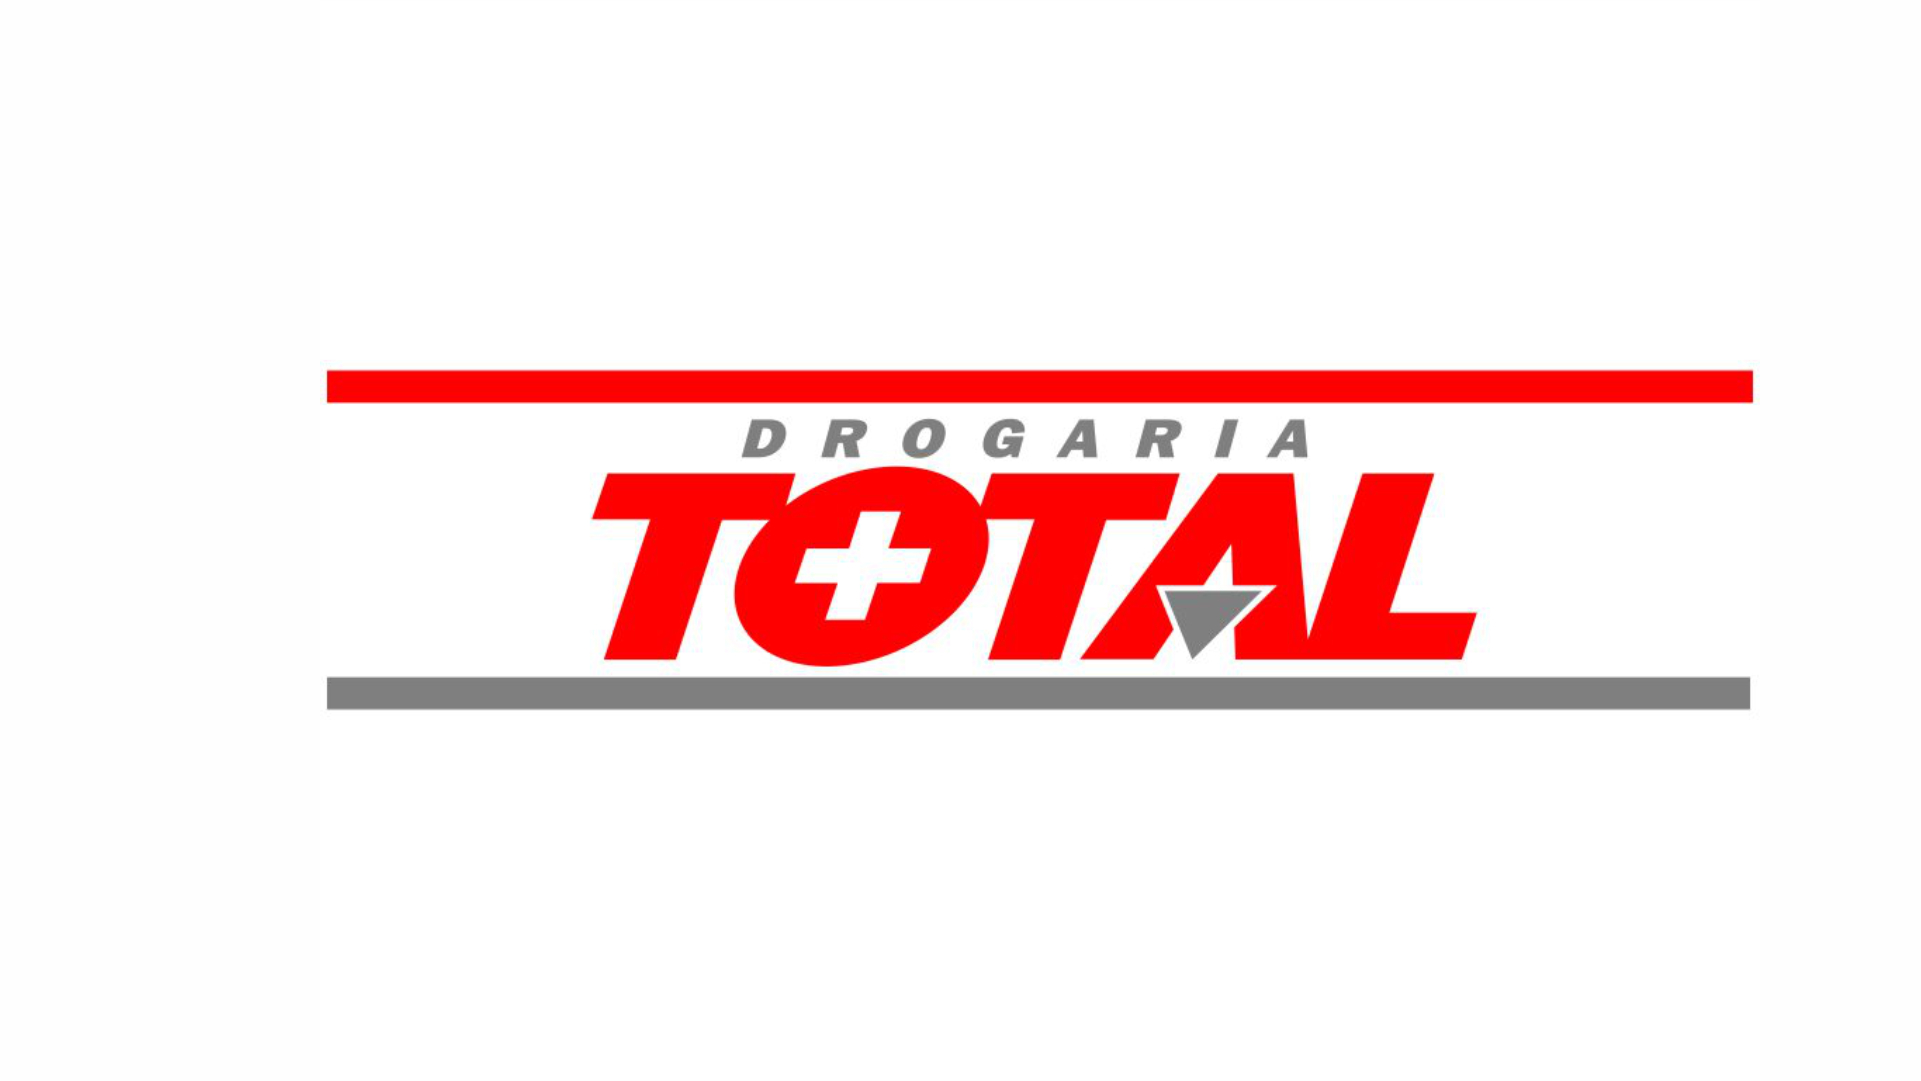 Drogaria São Paulo APK for Android Download